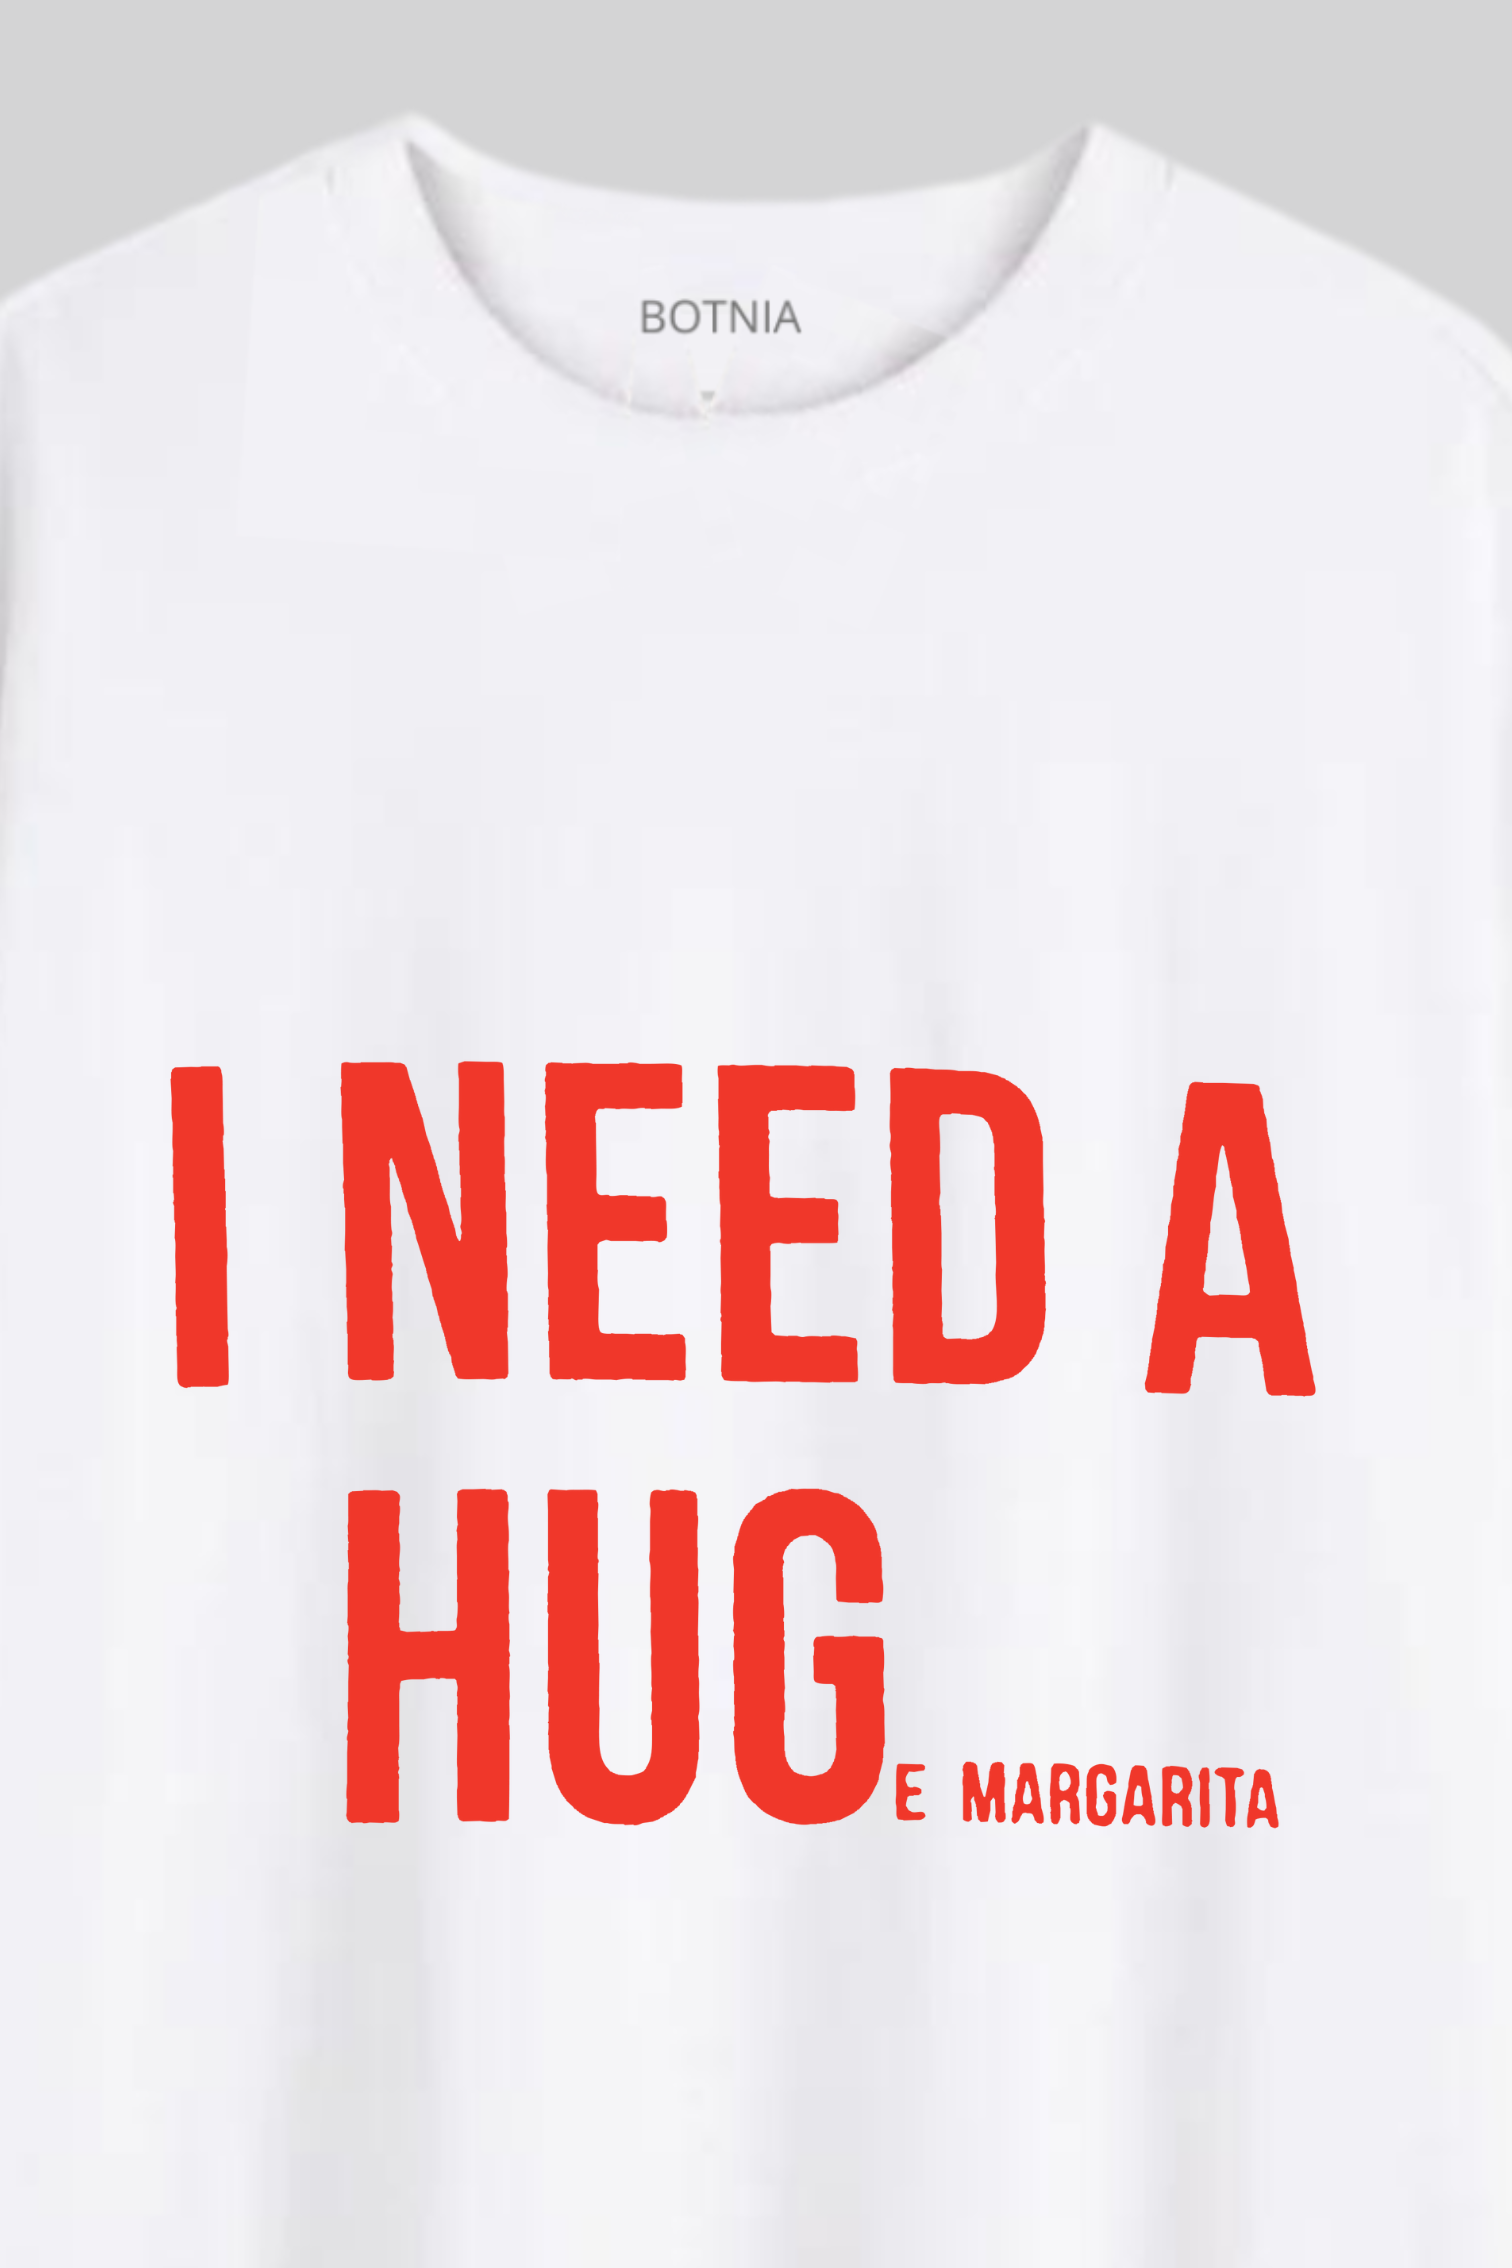 Need A Hug-E Margarita- Oversized t-shirt